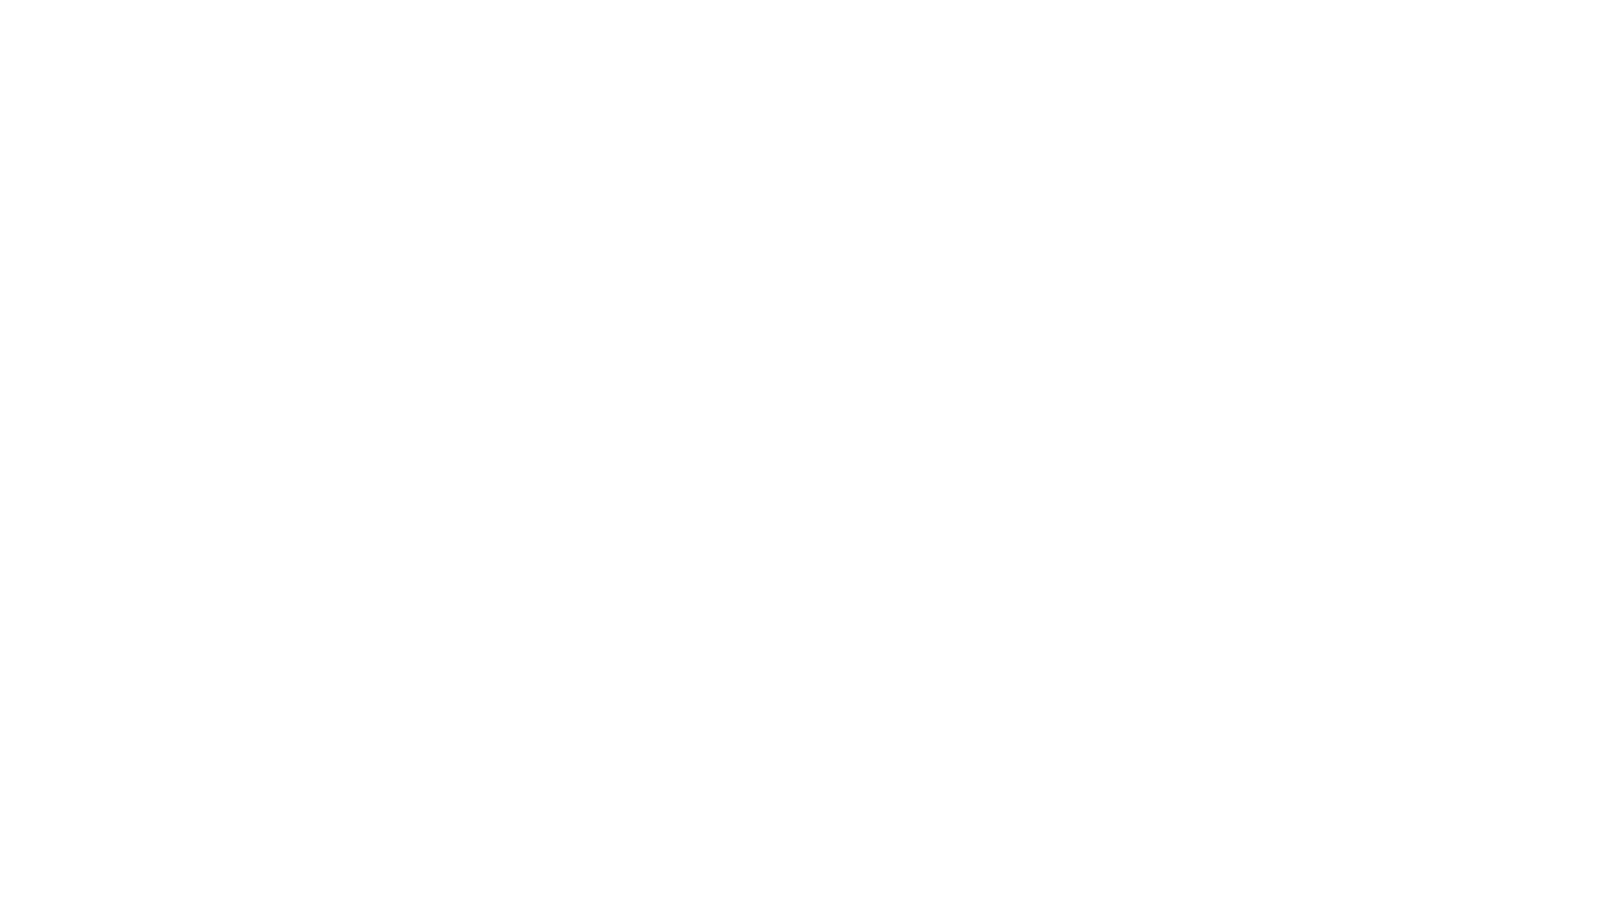 Bangladesh Notre Dame College Alumni of North America (BNDANA) webinar: “The Journey of Youth – Overcoming Challenges.” 
Sunday, May 12, 2024.
Keynote presenter : M. Osman Siddique, United States Ambassador,
#Usanewsonline​​​​​​​​​​​​​​​​​​​​​​​​​​​​​​​​​​​​​​​​.Com #Usanewsonline​​​​​​​​​​​​​​​​​​​​​​​​​​​​​​​​​​​​​​​​ #UsaNewsOnline​​​​​​​​​​​​​​​​​​​​​​​​​​​​​​​​​​​​​​​​ Journal #USANewsNY​​​​​​​​​​​​​​​​​​​​​​​​​​​​​​​​​​​​​​​​ #bangla​​​​​​​​​​​​​​​​​​​​​​​​​​​​​​​​​​​​​​​​ talk show  #bangla talk show Usanewsonline #bangla talk show Usanewsonline.Com #bangla talk show UsaNewsOnline Journal #talk show #M. Osman Siddique, United States Ambassador #bangla news paper #bangladeshi-american #bangladeshi #nere me bangla news paper #bangladesh  #bangla #BNDANA #Bangladesh Notre Dame College Alumni of North America (BNDANA)
#bandana #bangladesh  #bangladeshi #bangla #usa #news24usa #UsaNewsOnline #webinar